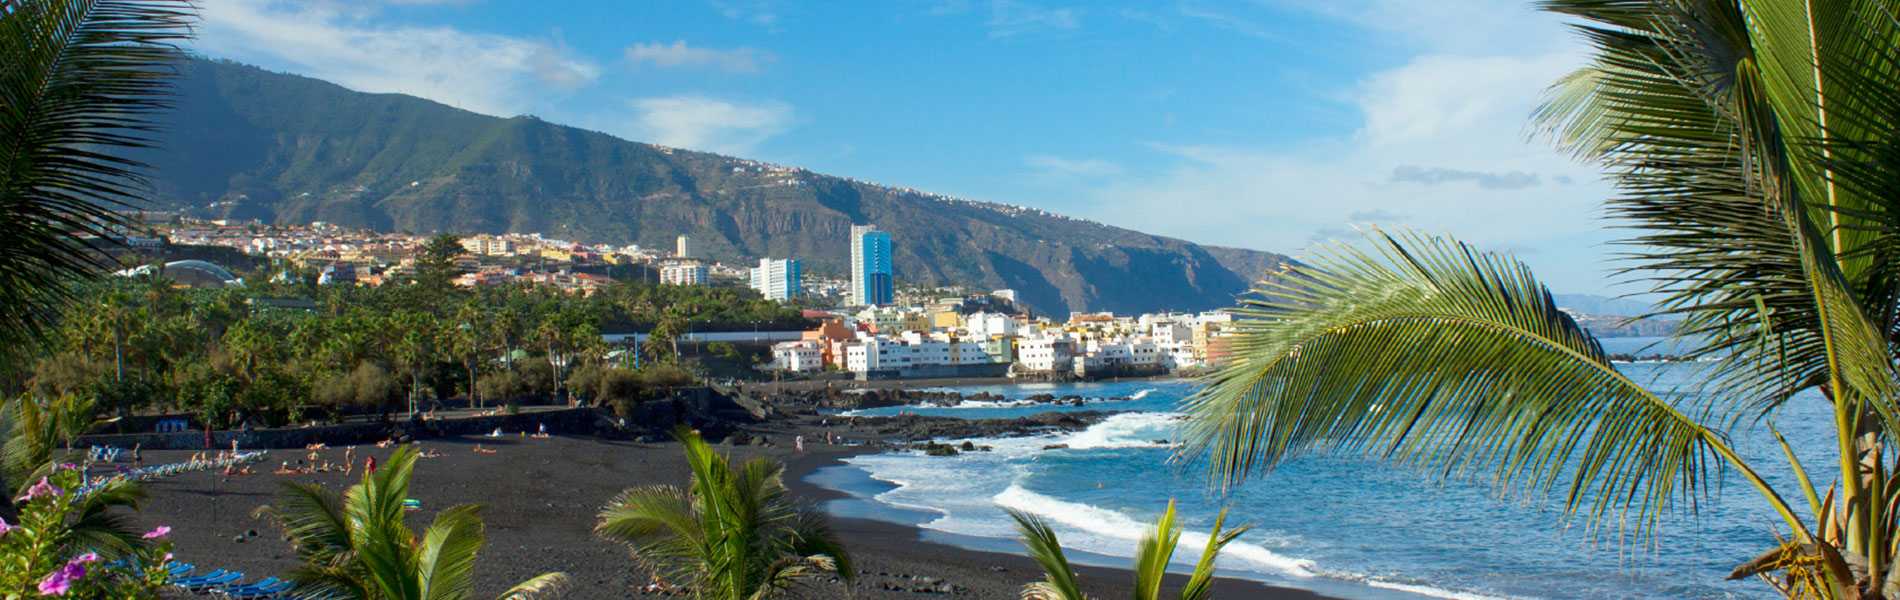 Tropical Tenerife